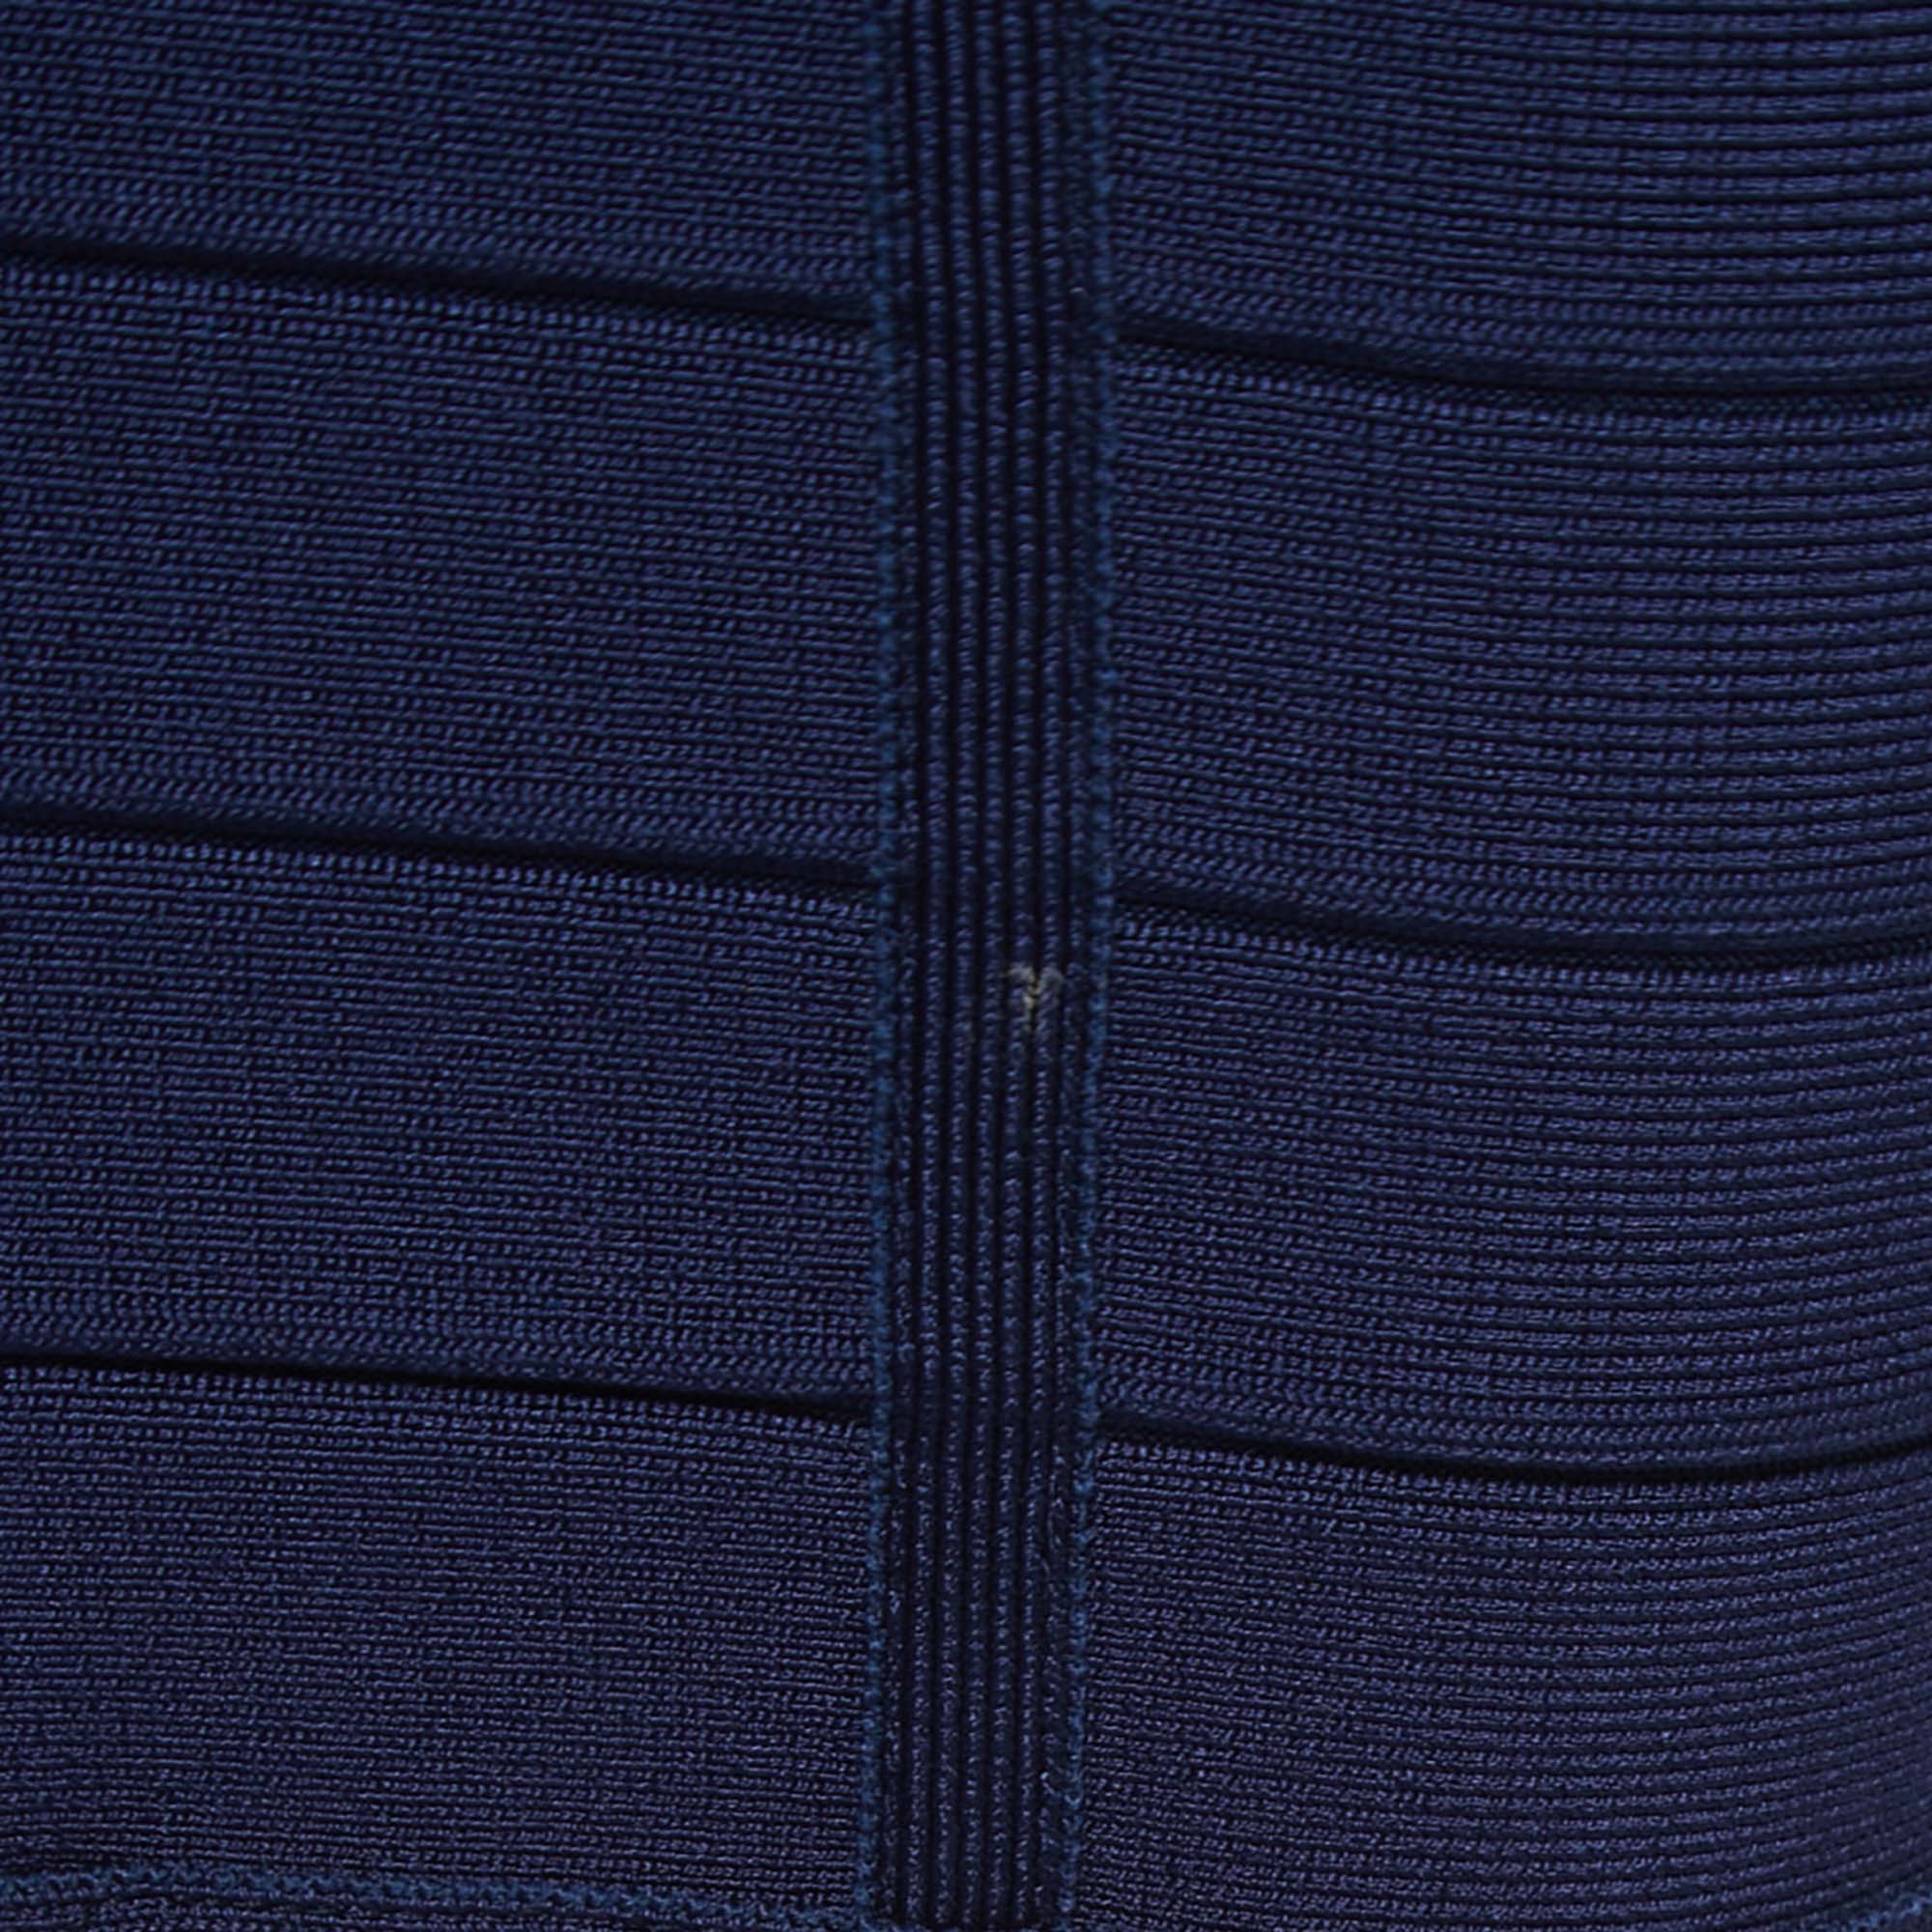 Herve Leger Navy Blue Knit Midi Dress XS